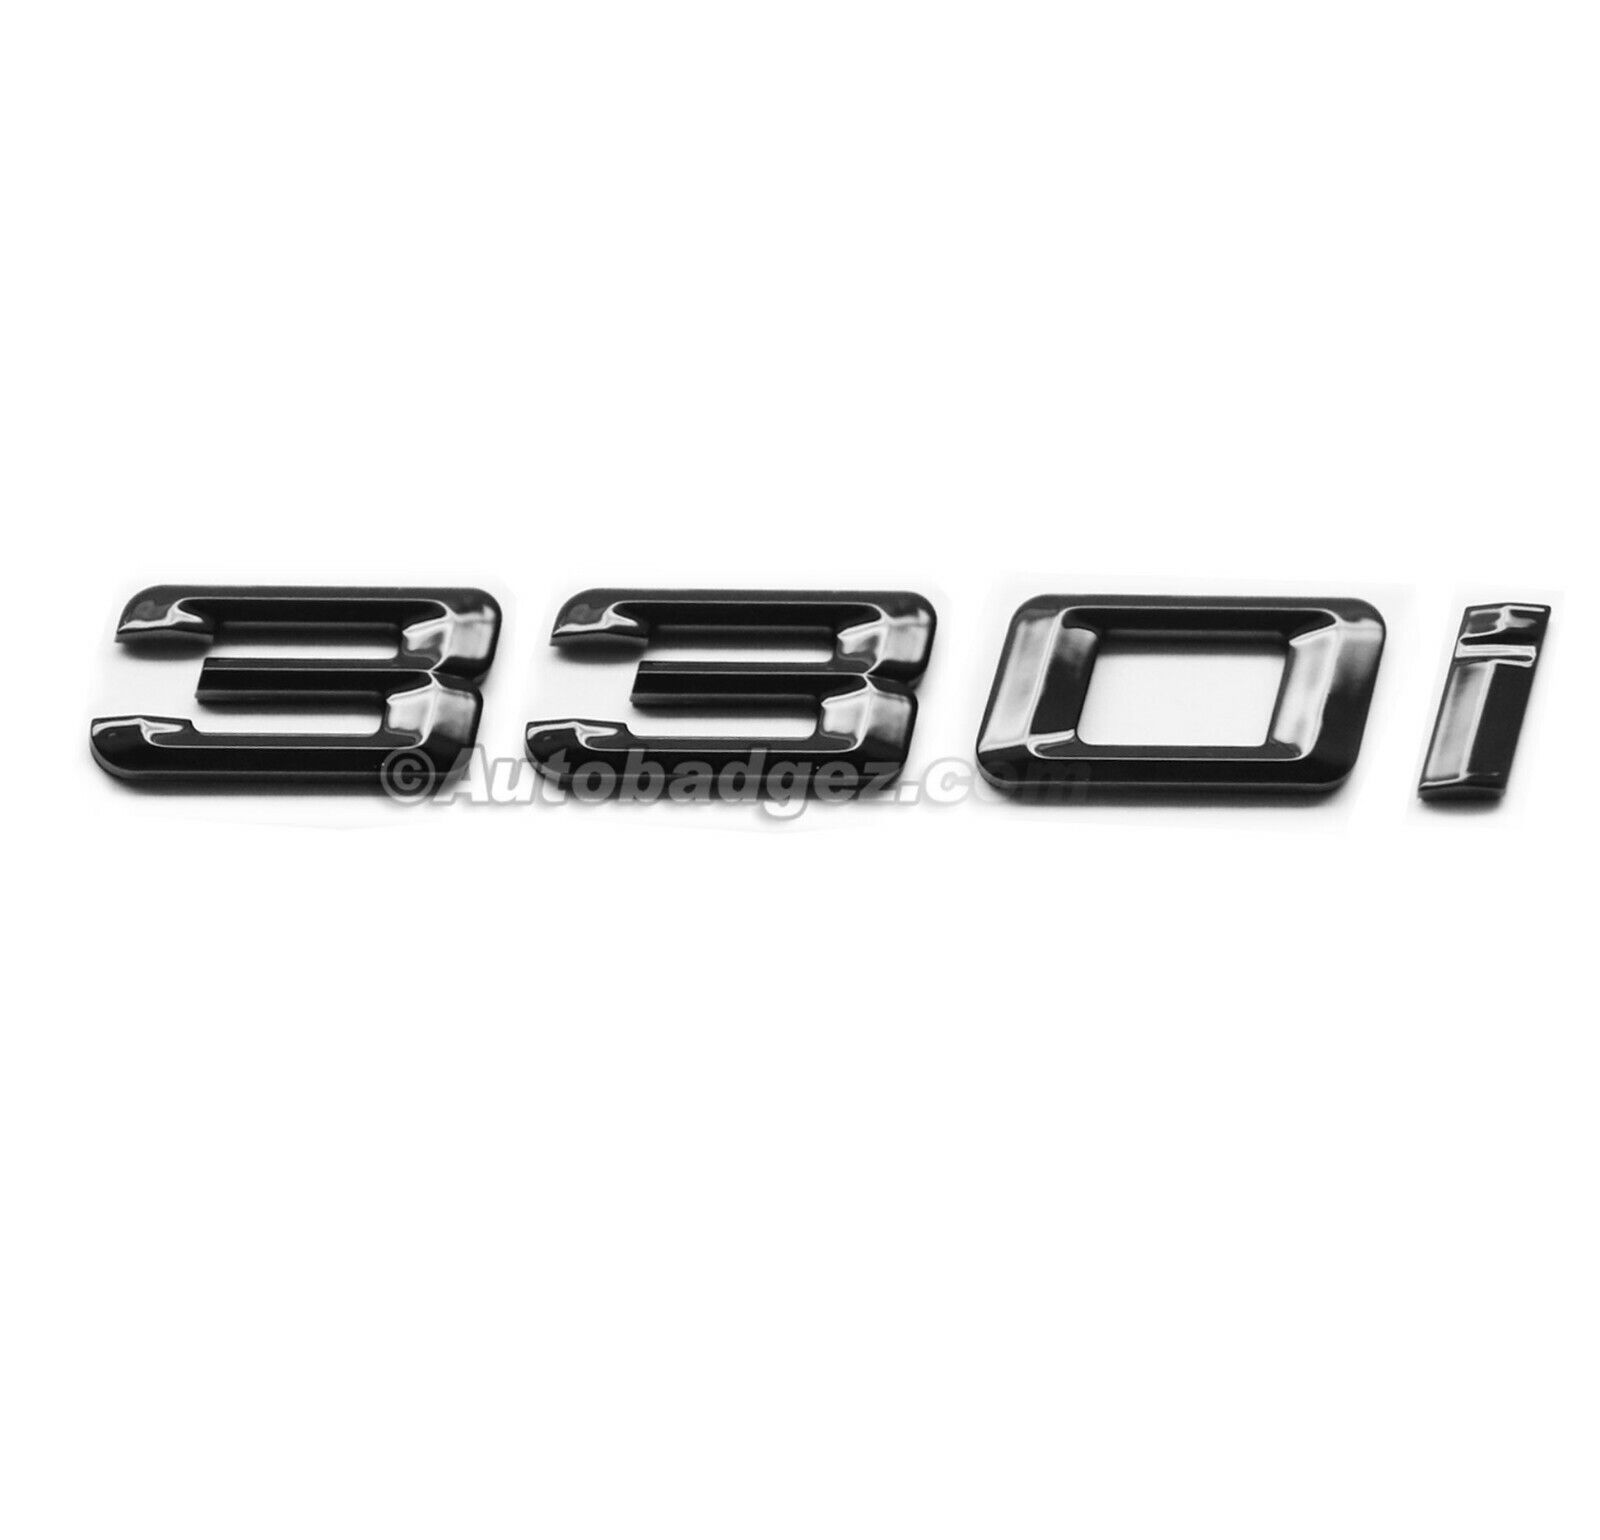 330i Rear Trunk Deck 3D Numbers Badge Emblem OEM Quality Gloss Black 330I USA